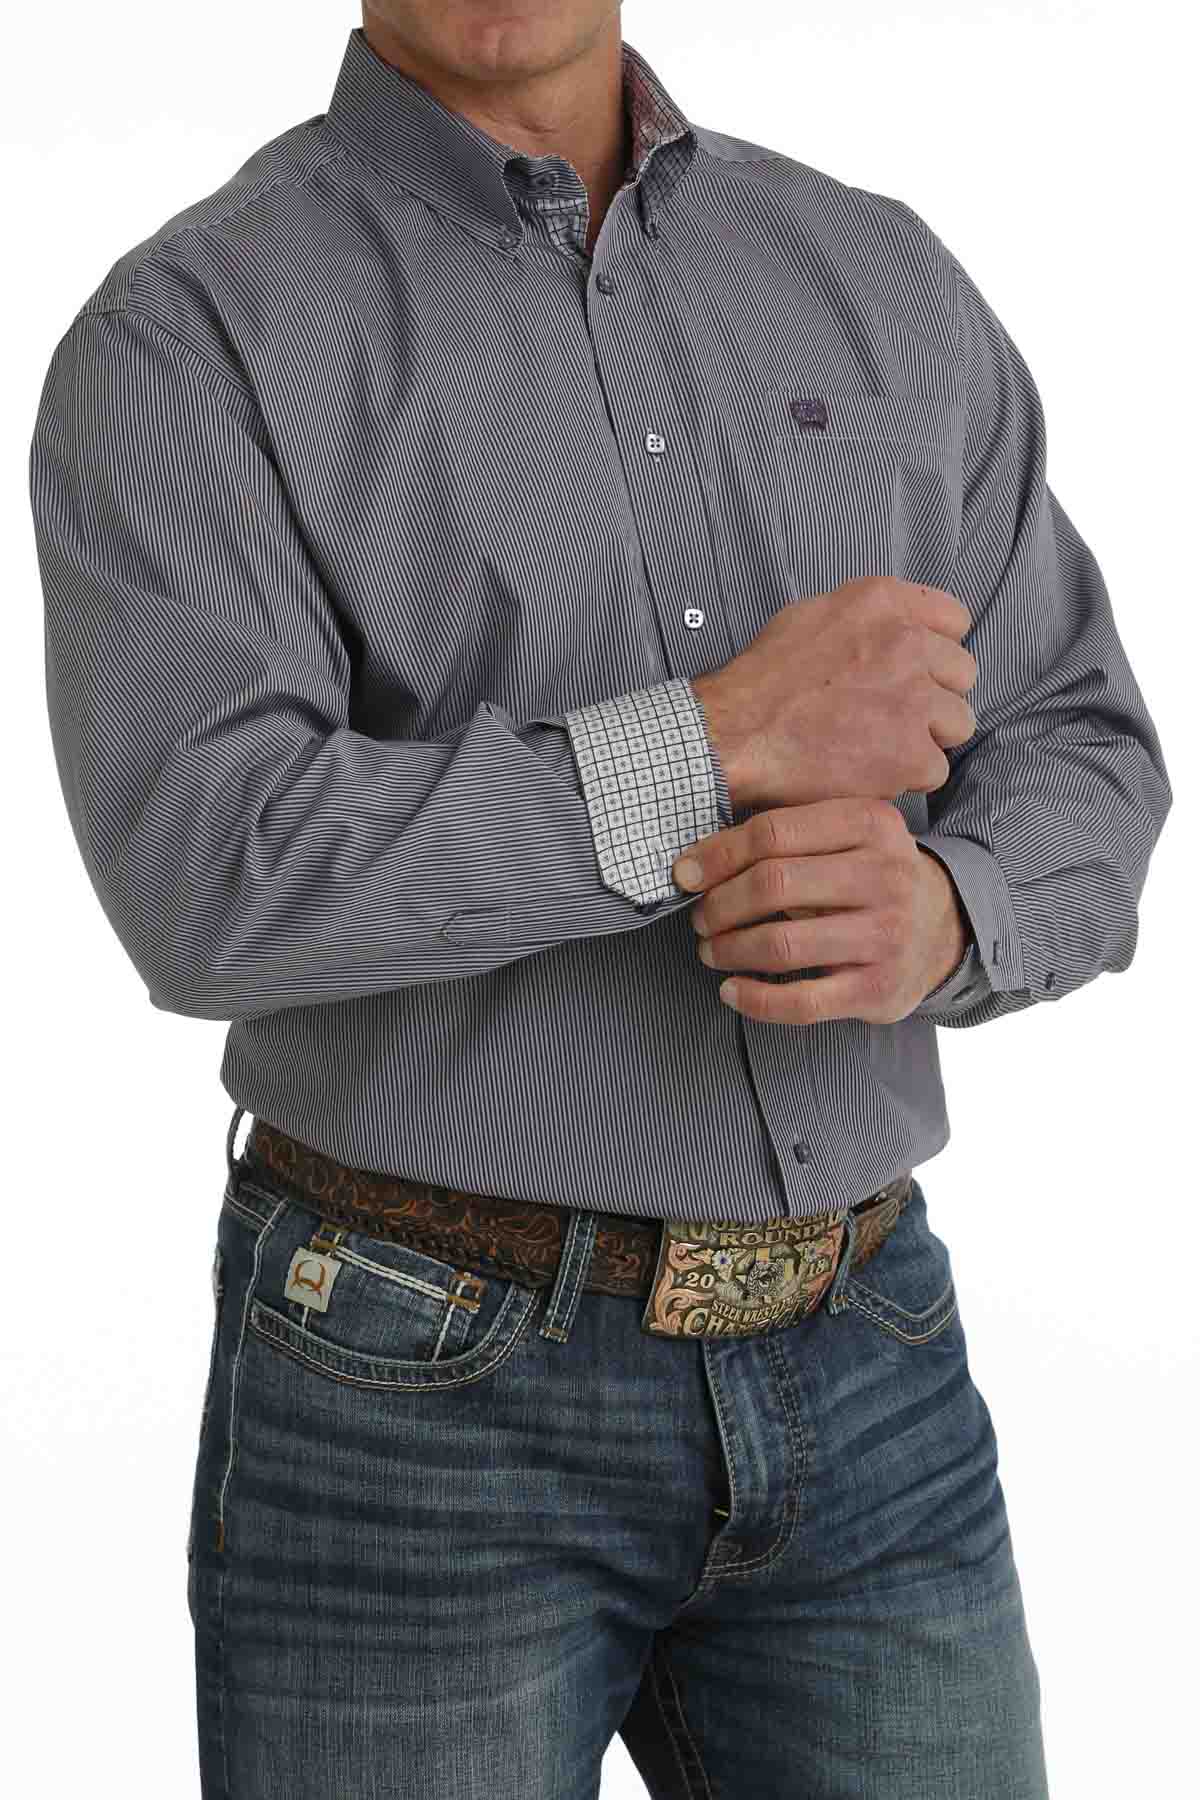 Long-Sleeve Button Down Western Shirt in Purple by Cinch